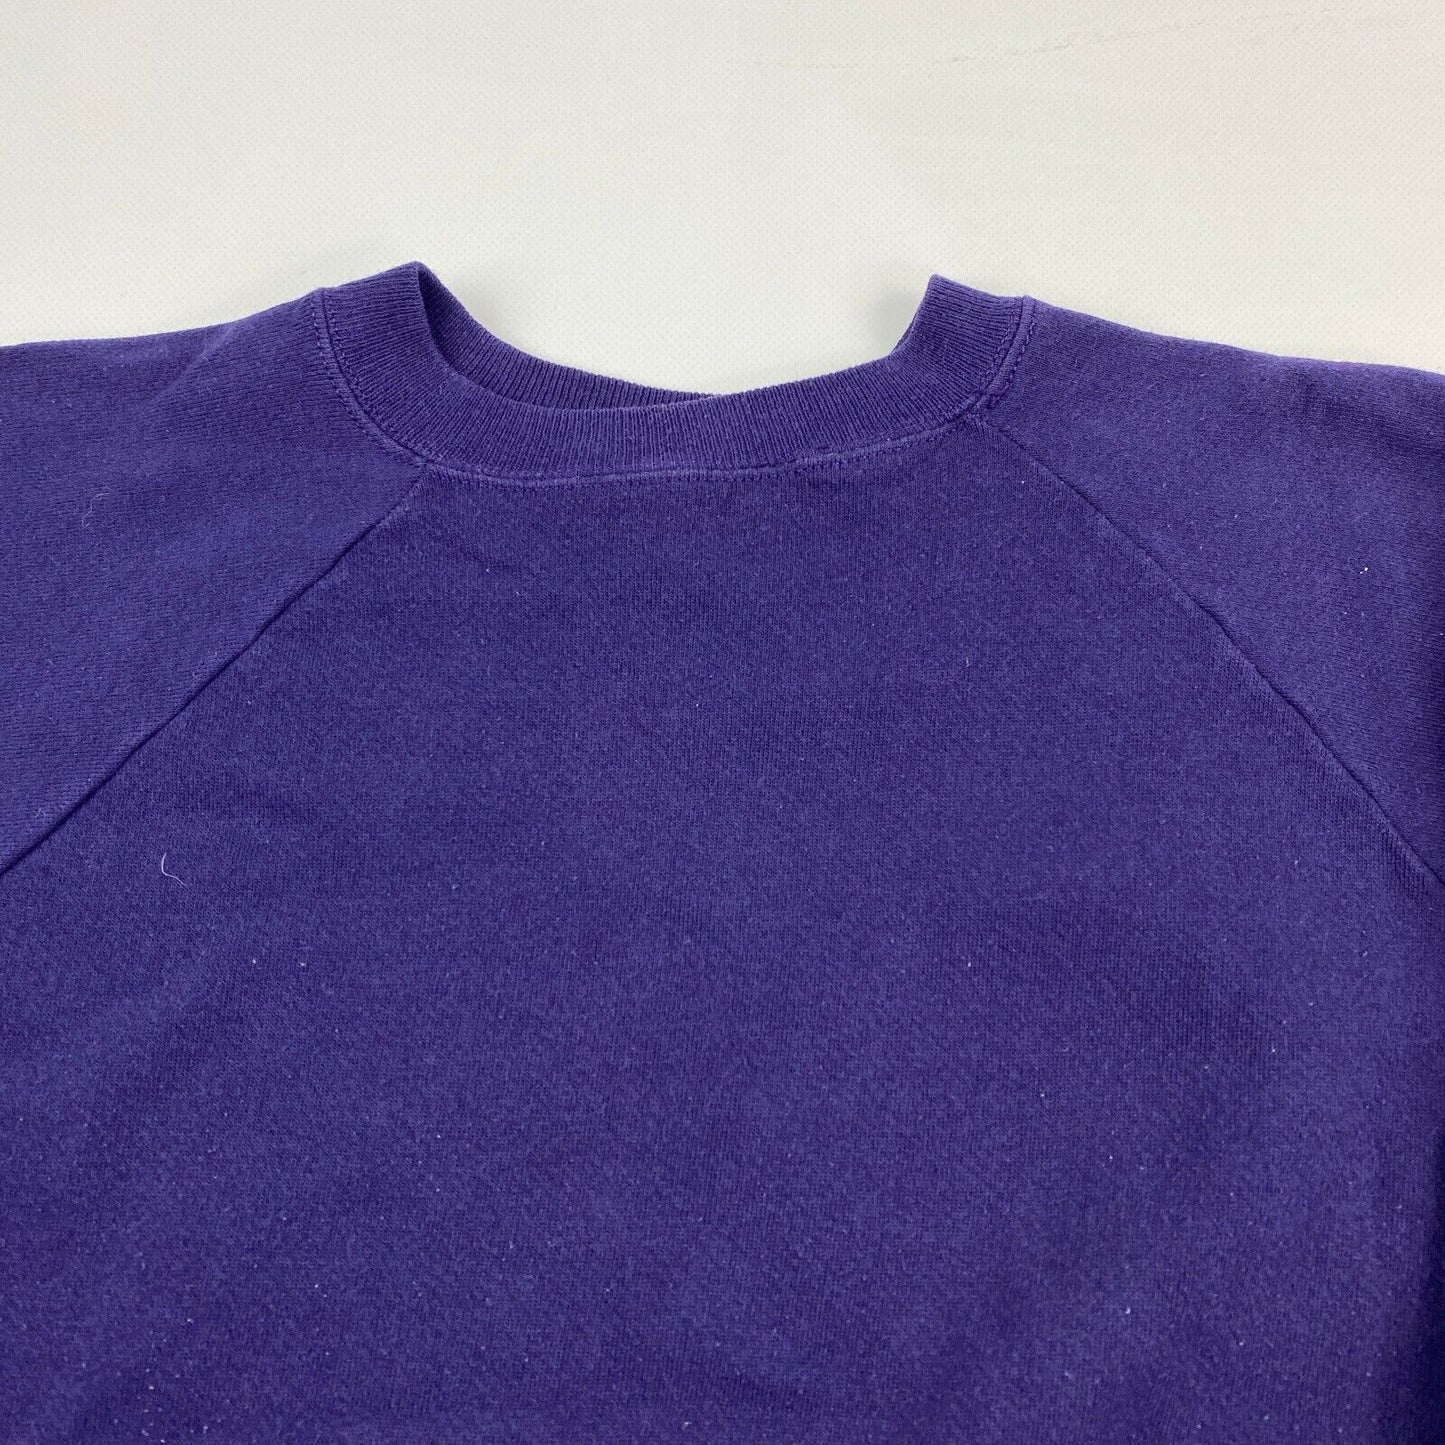 VINTAGE 90s Hanes Blank Purple Crewneck Sweater sz XL Womens